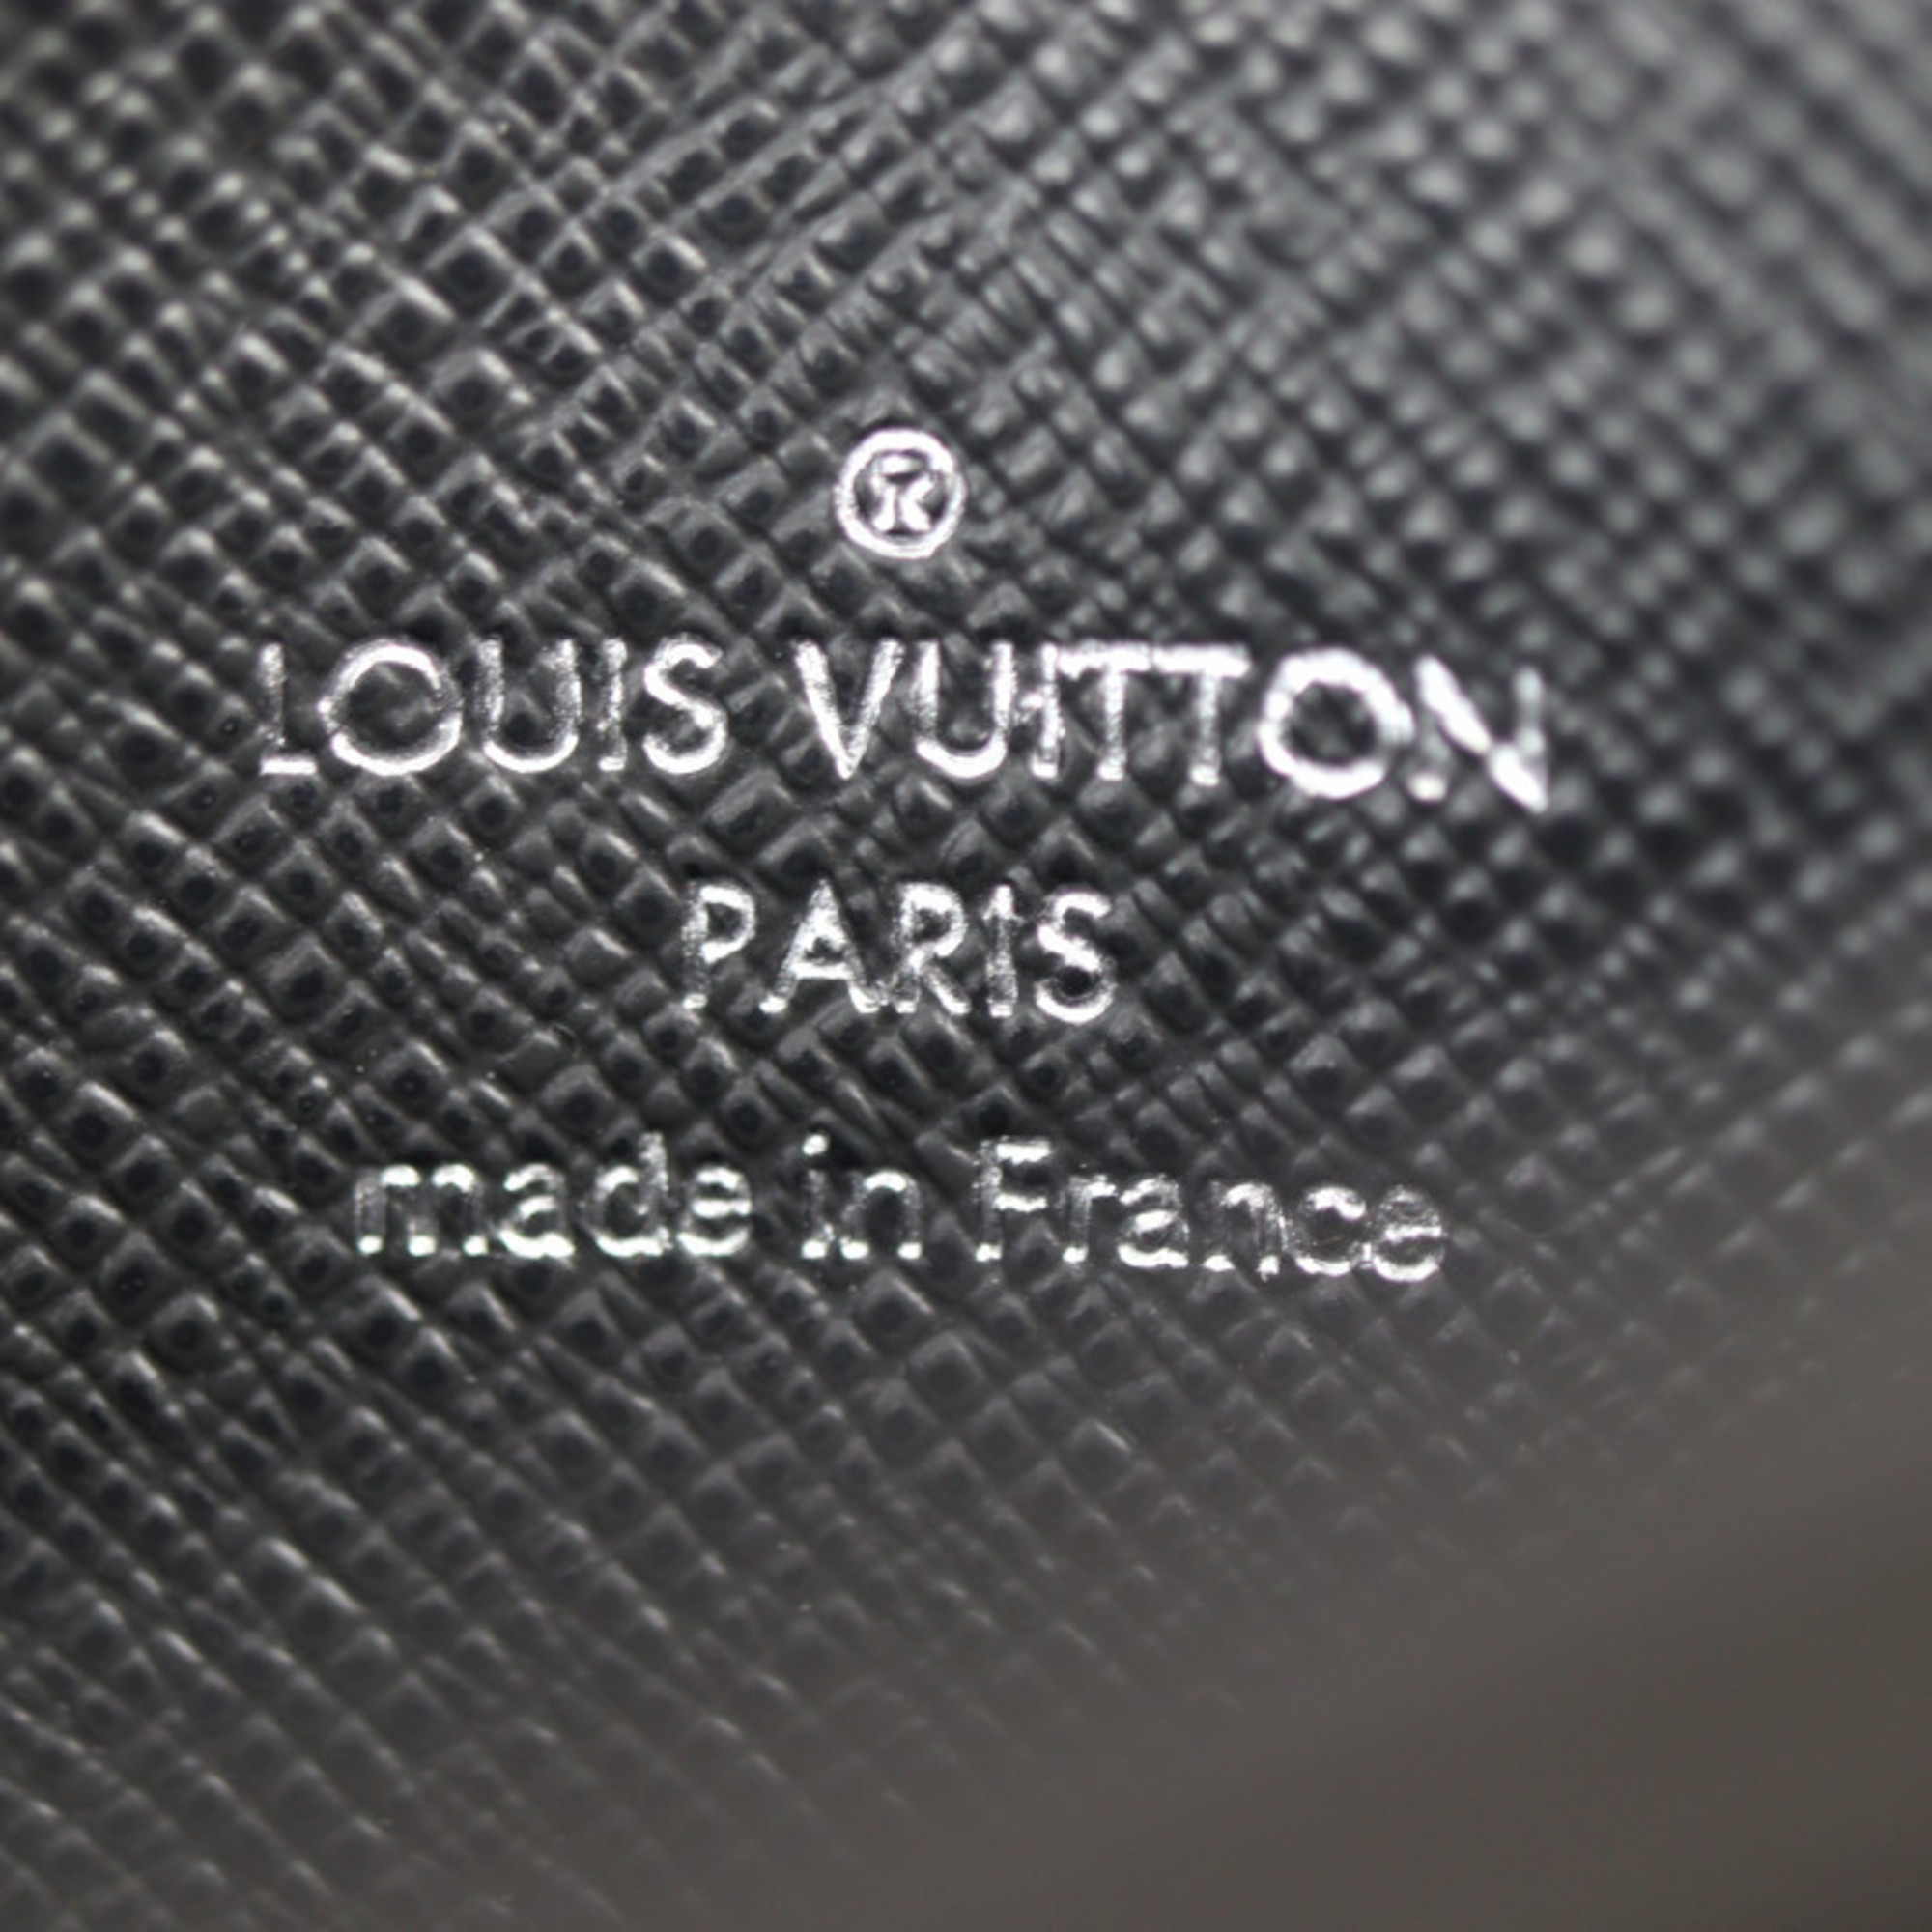 LOUIS VUITTON Porto Cult Double Card Case M32730 Taiga Black Business Holder Vuitton